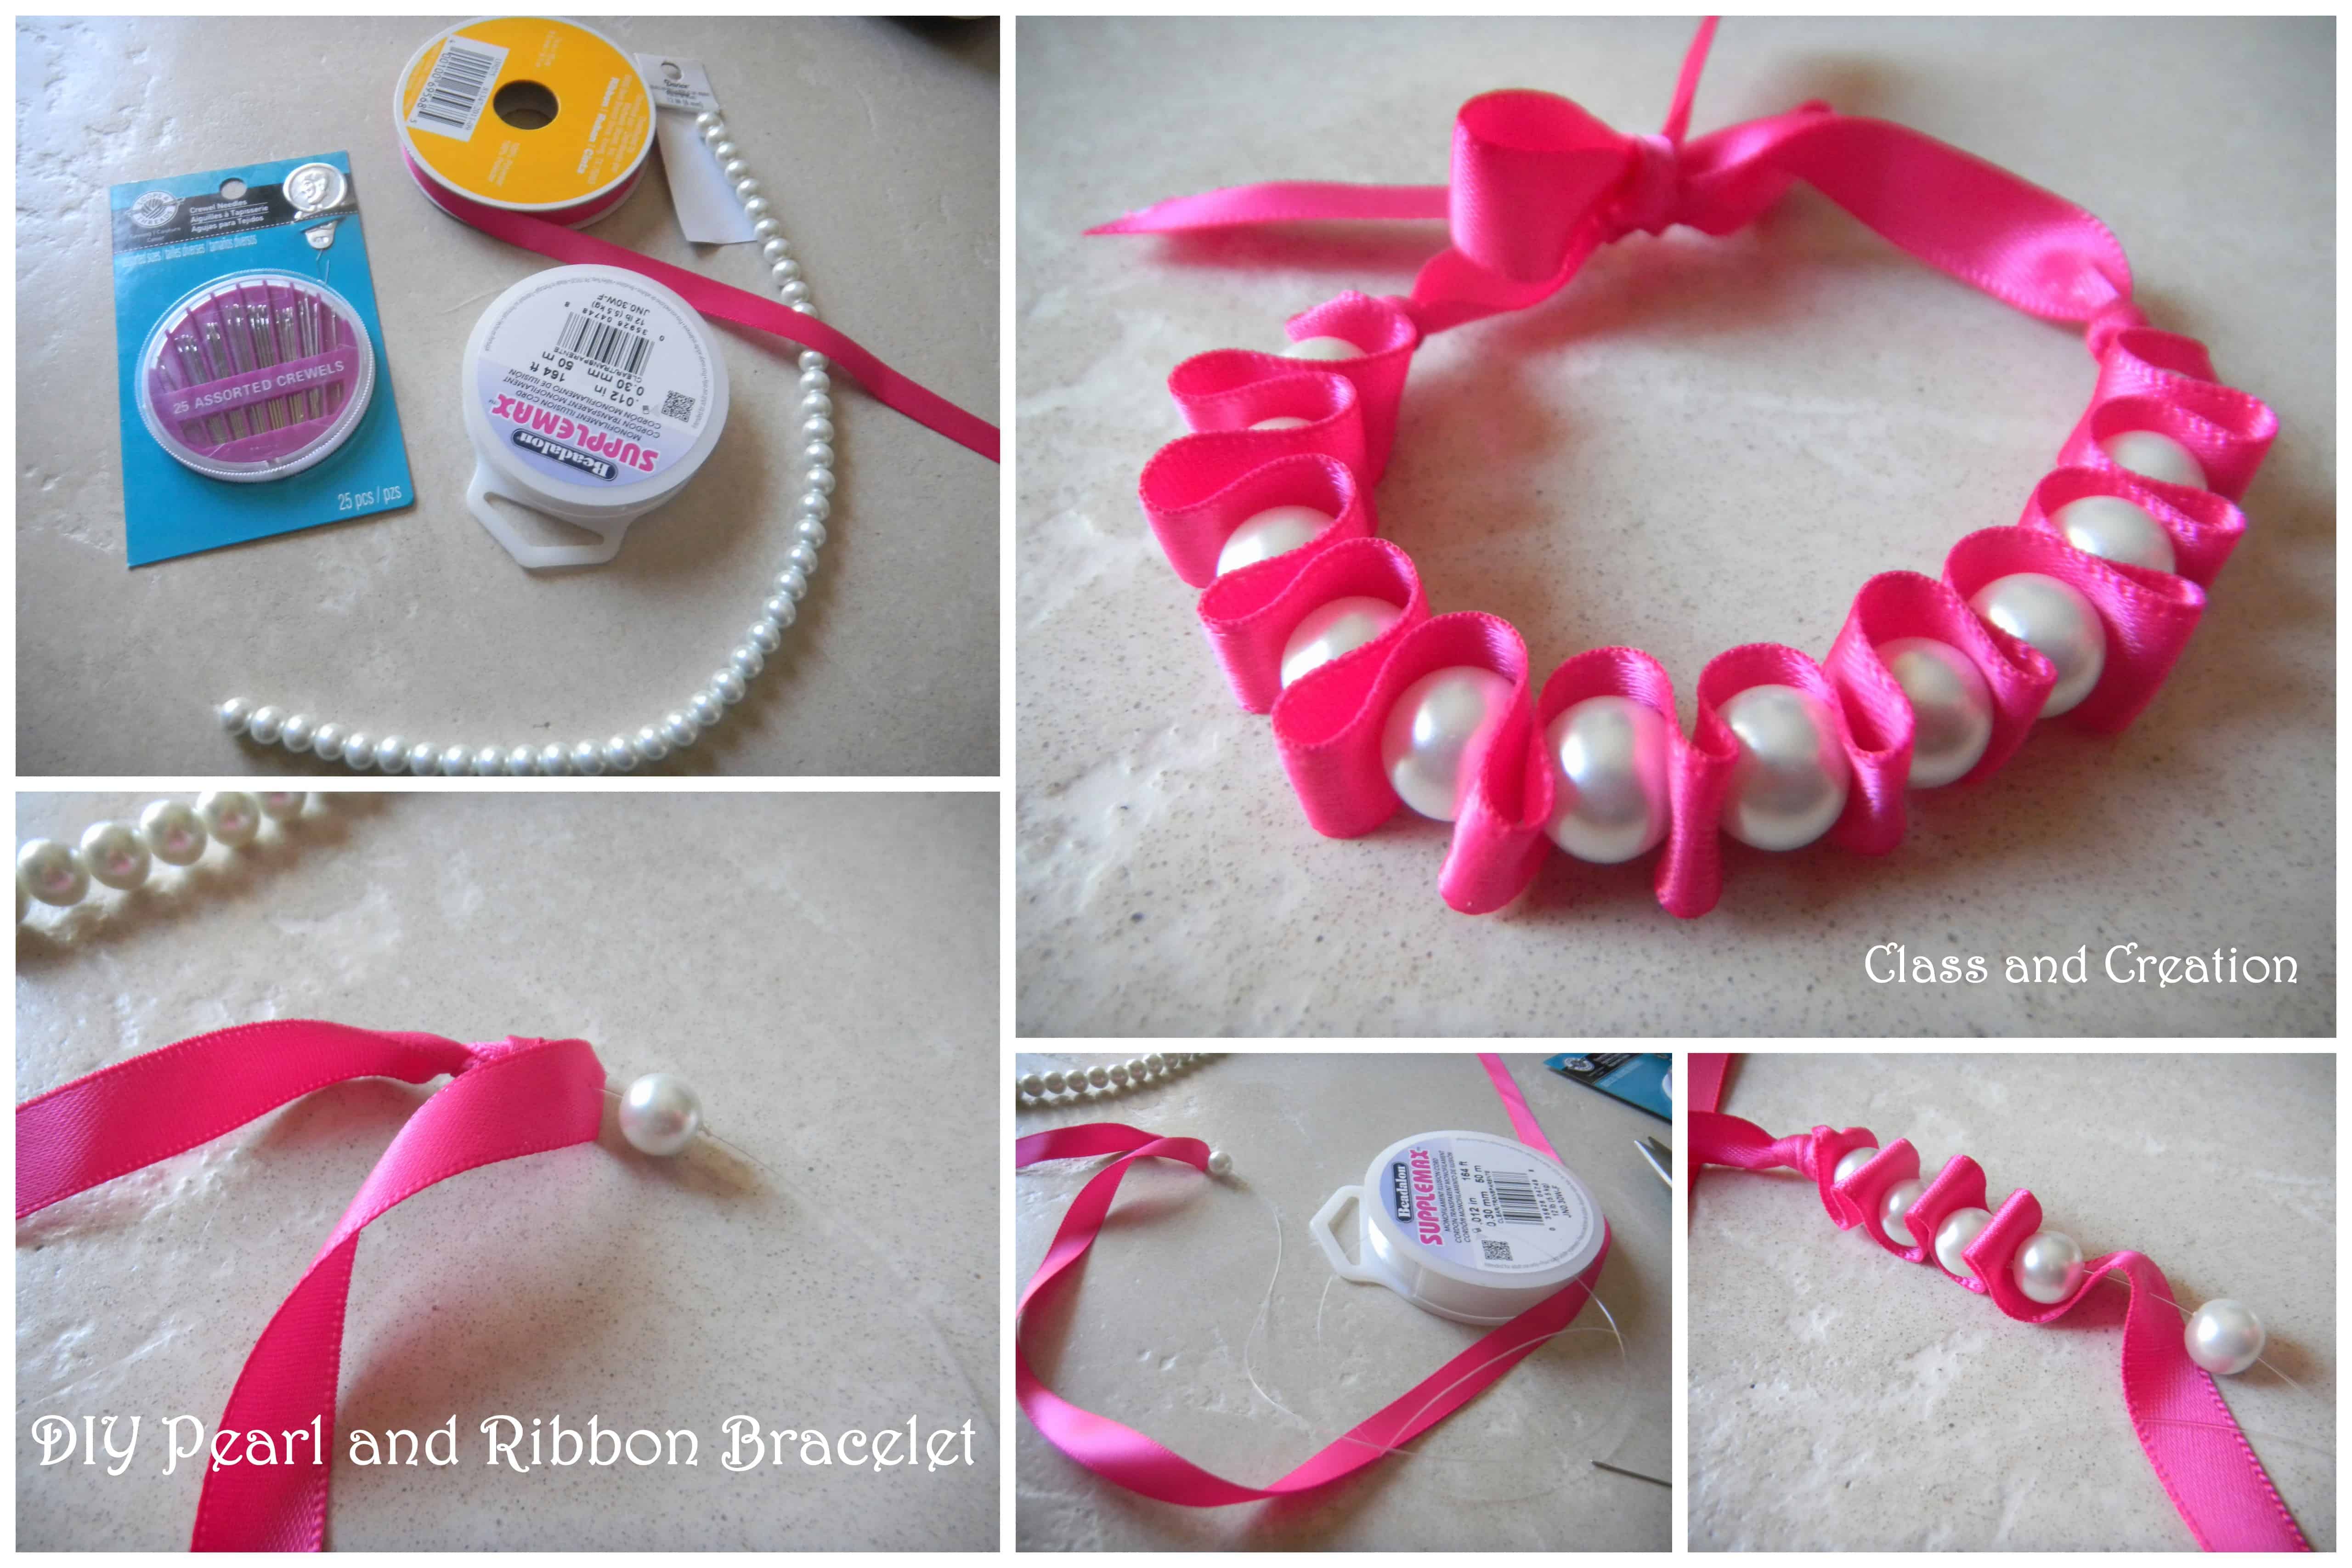 Ribbon and pearl bracelet